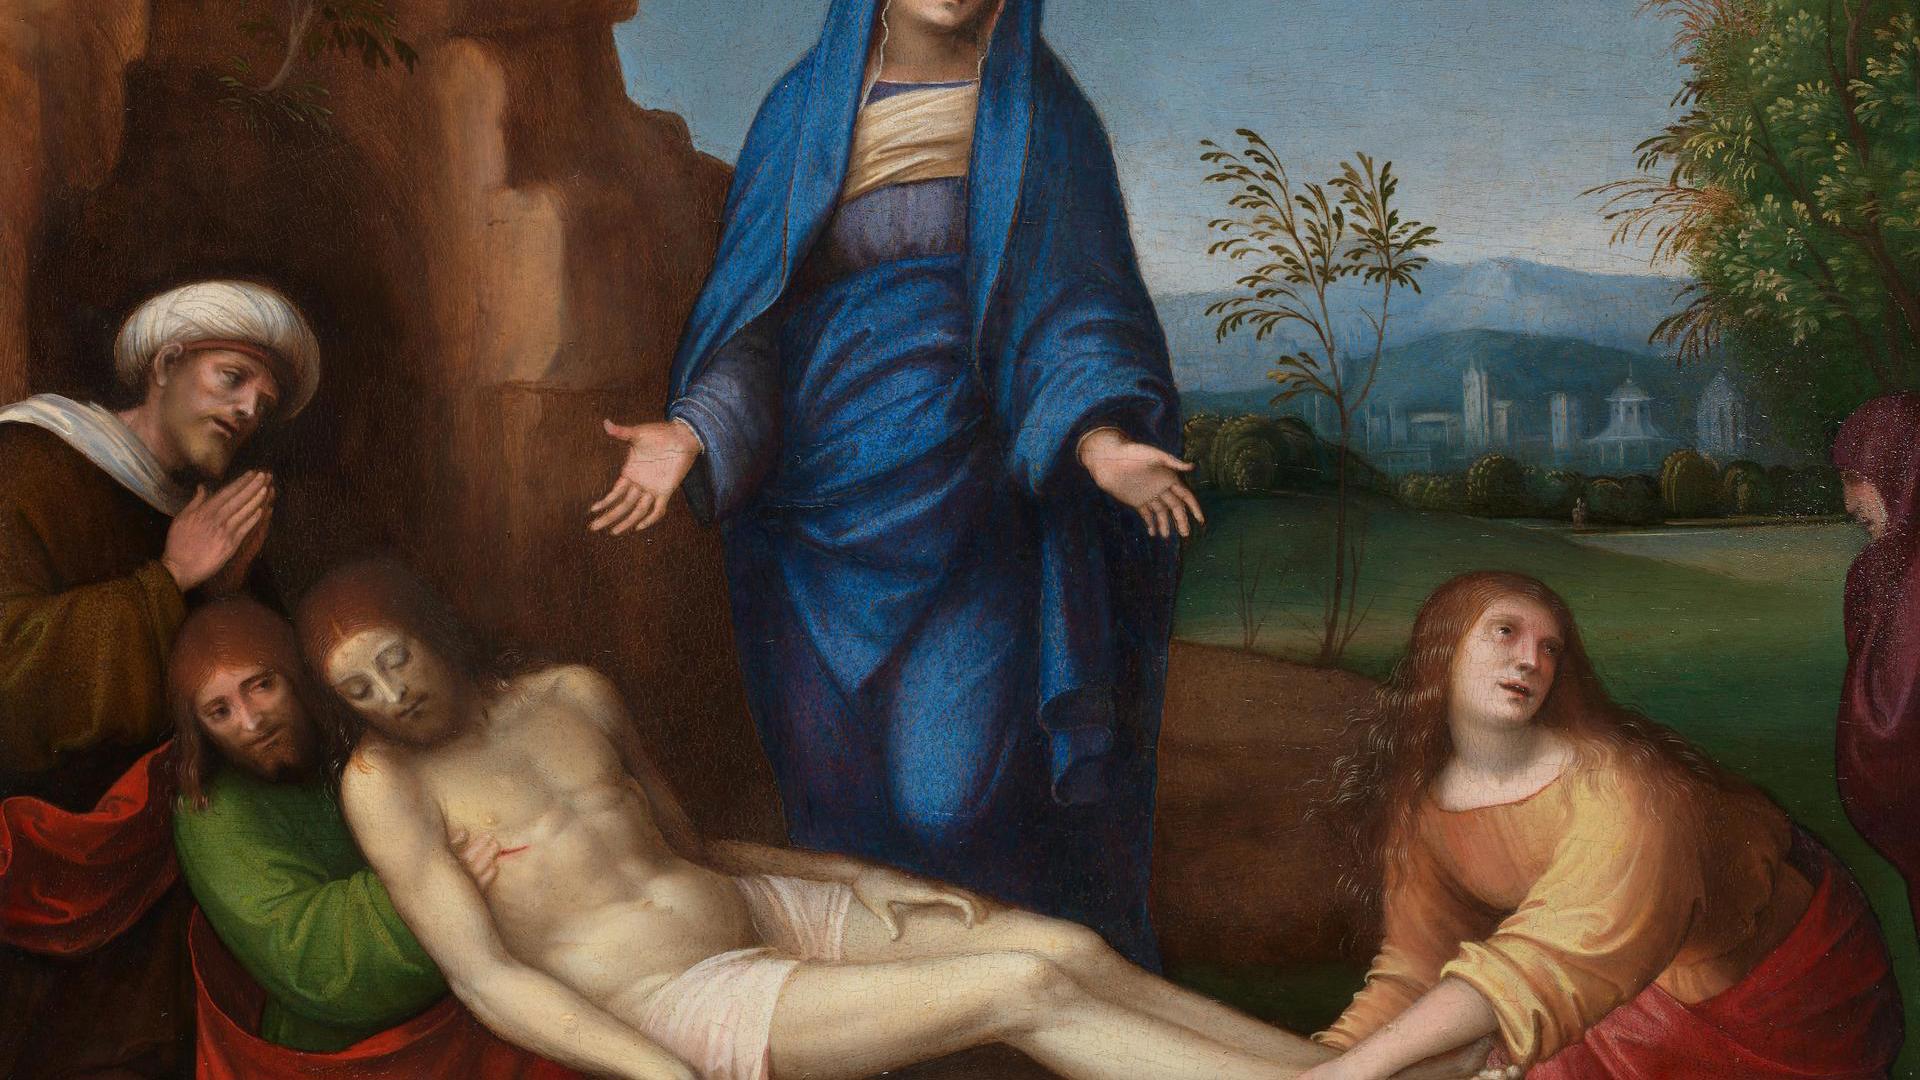 The Lamentation over the Dead Christ by Francesco Francia